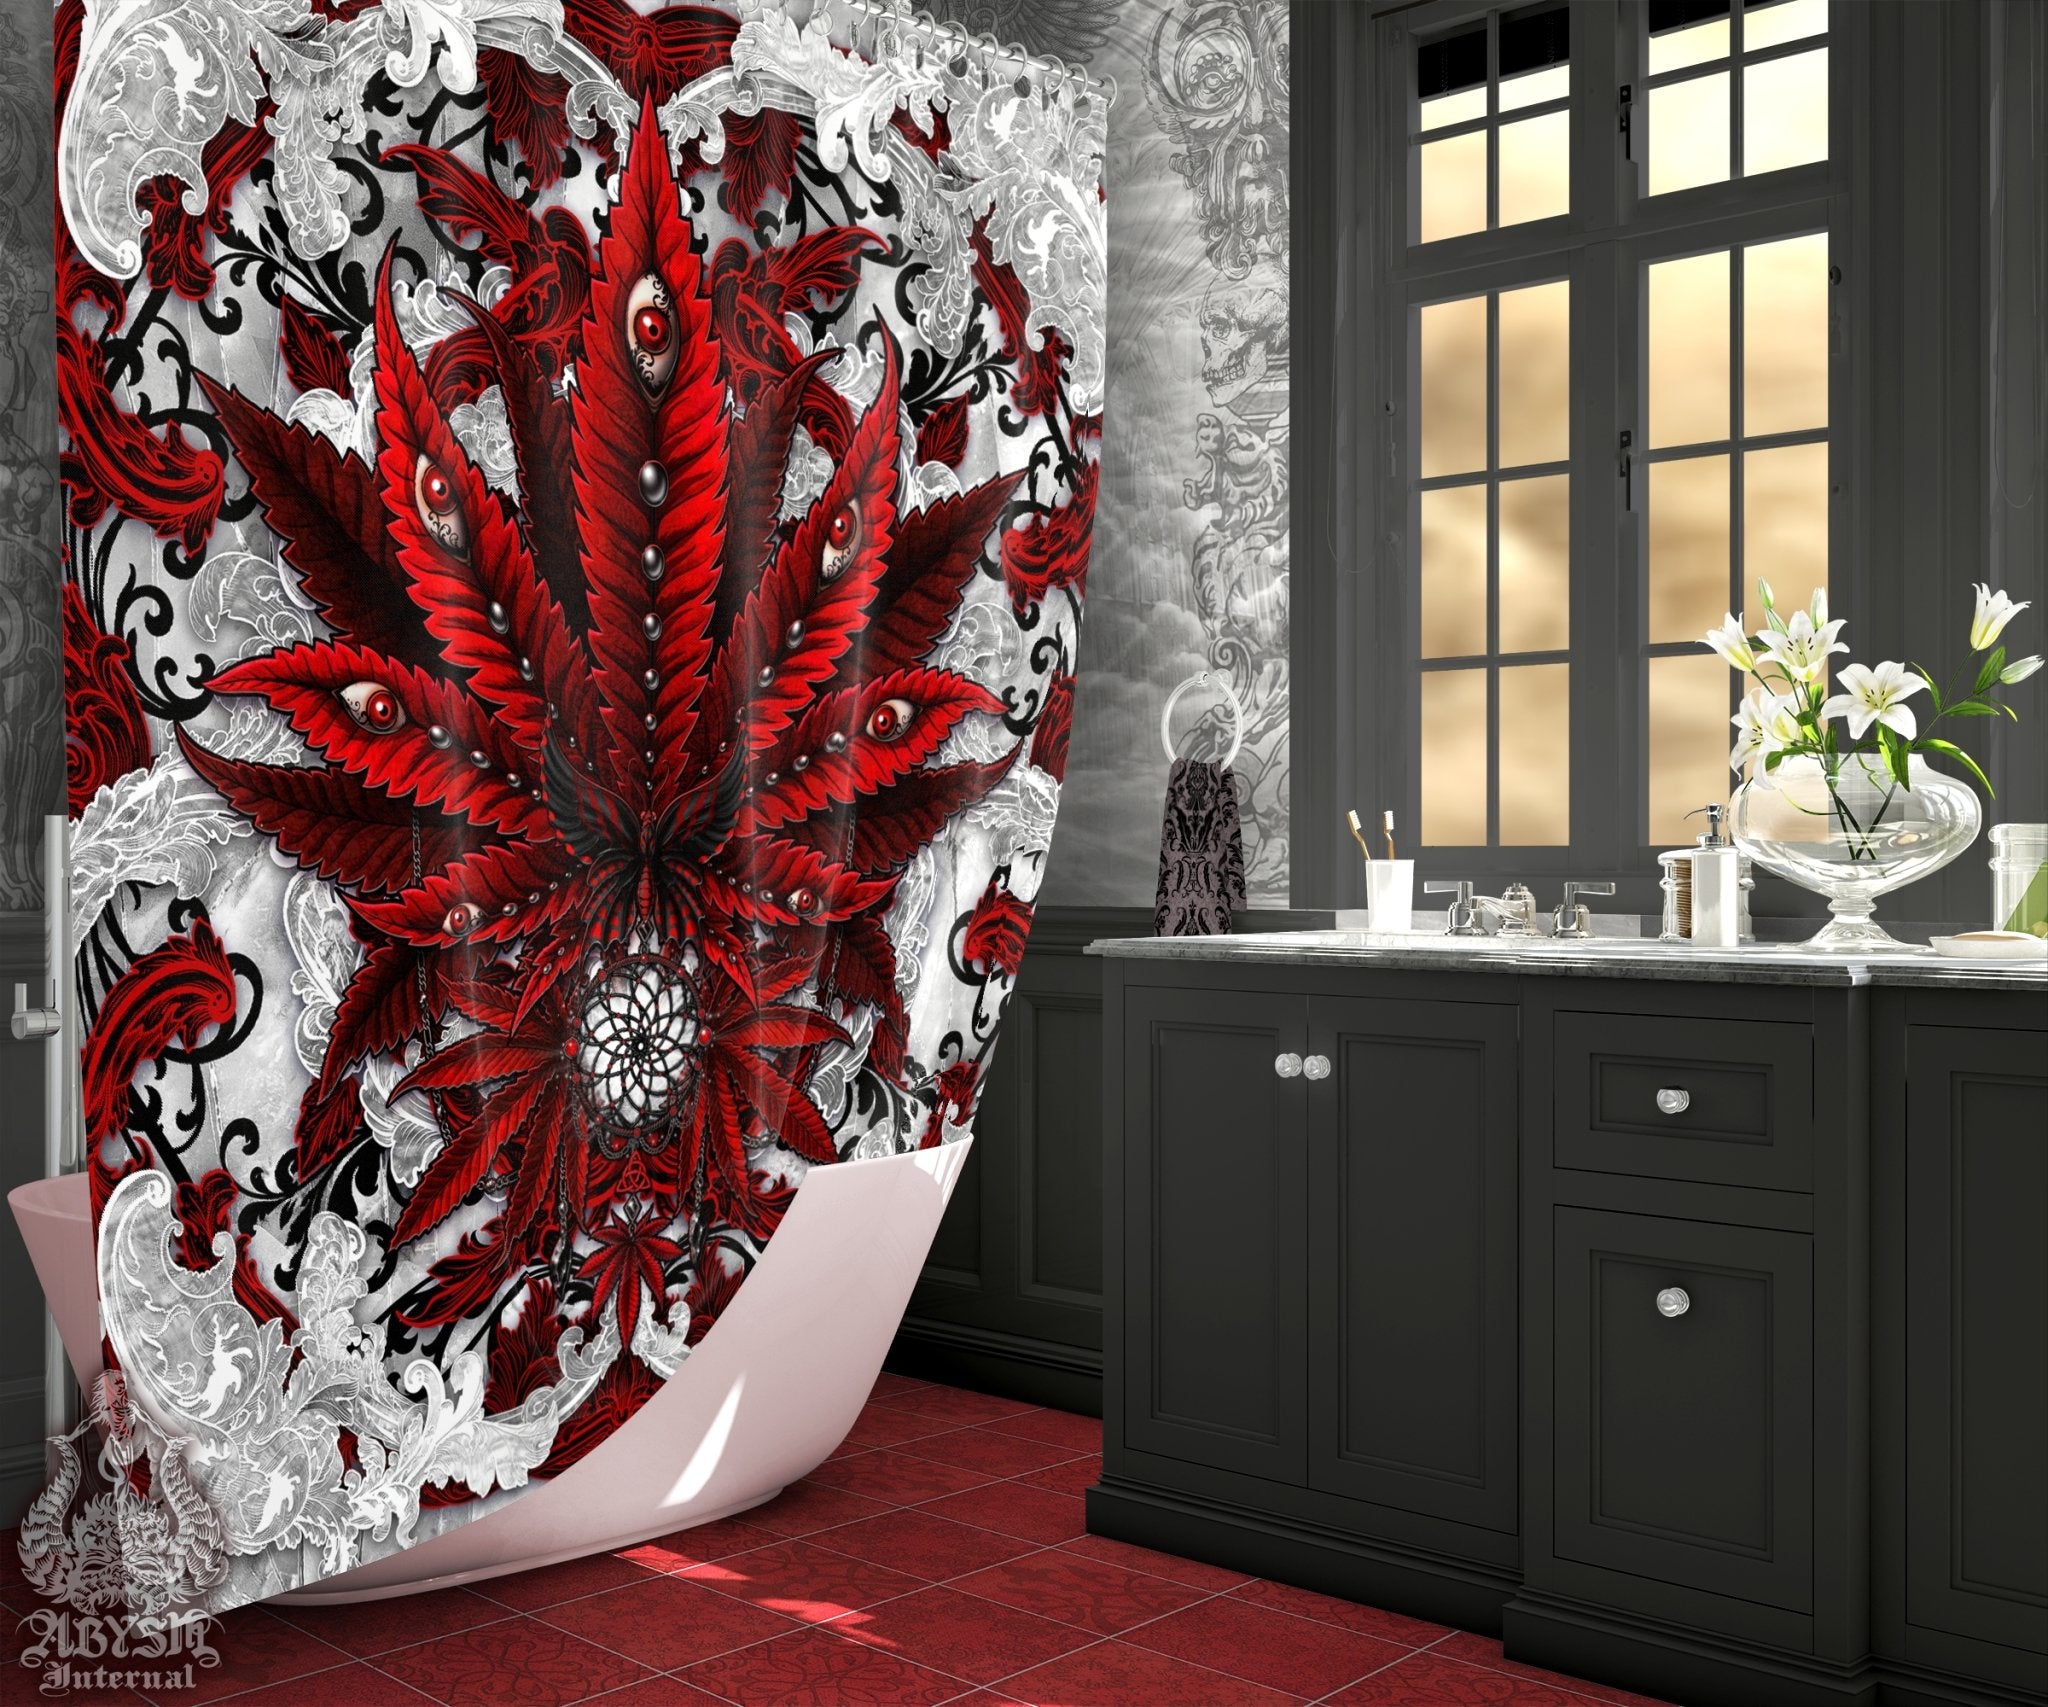 Weed Shower Curtain, Gothic Bathroom Decor, Cannabis Print, Alternative 420 Home Art - Marijuana, Bloody White Goth - Abysm Internal